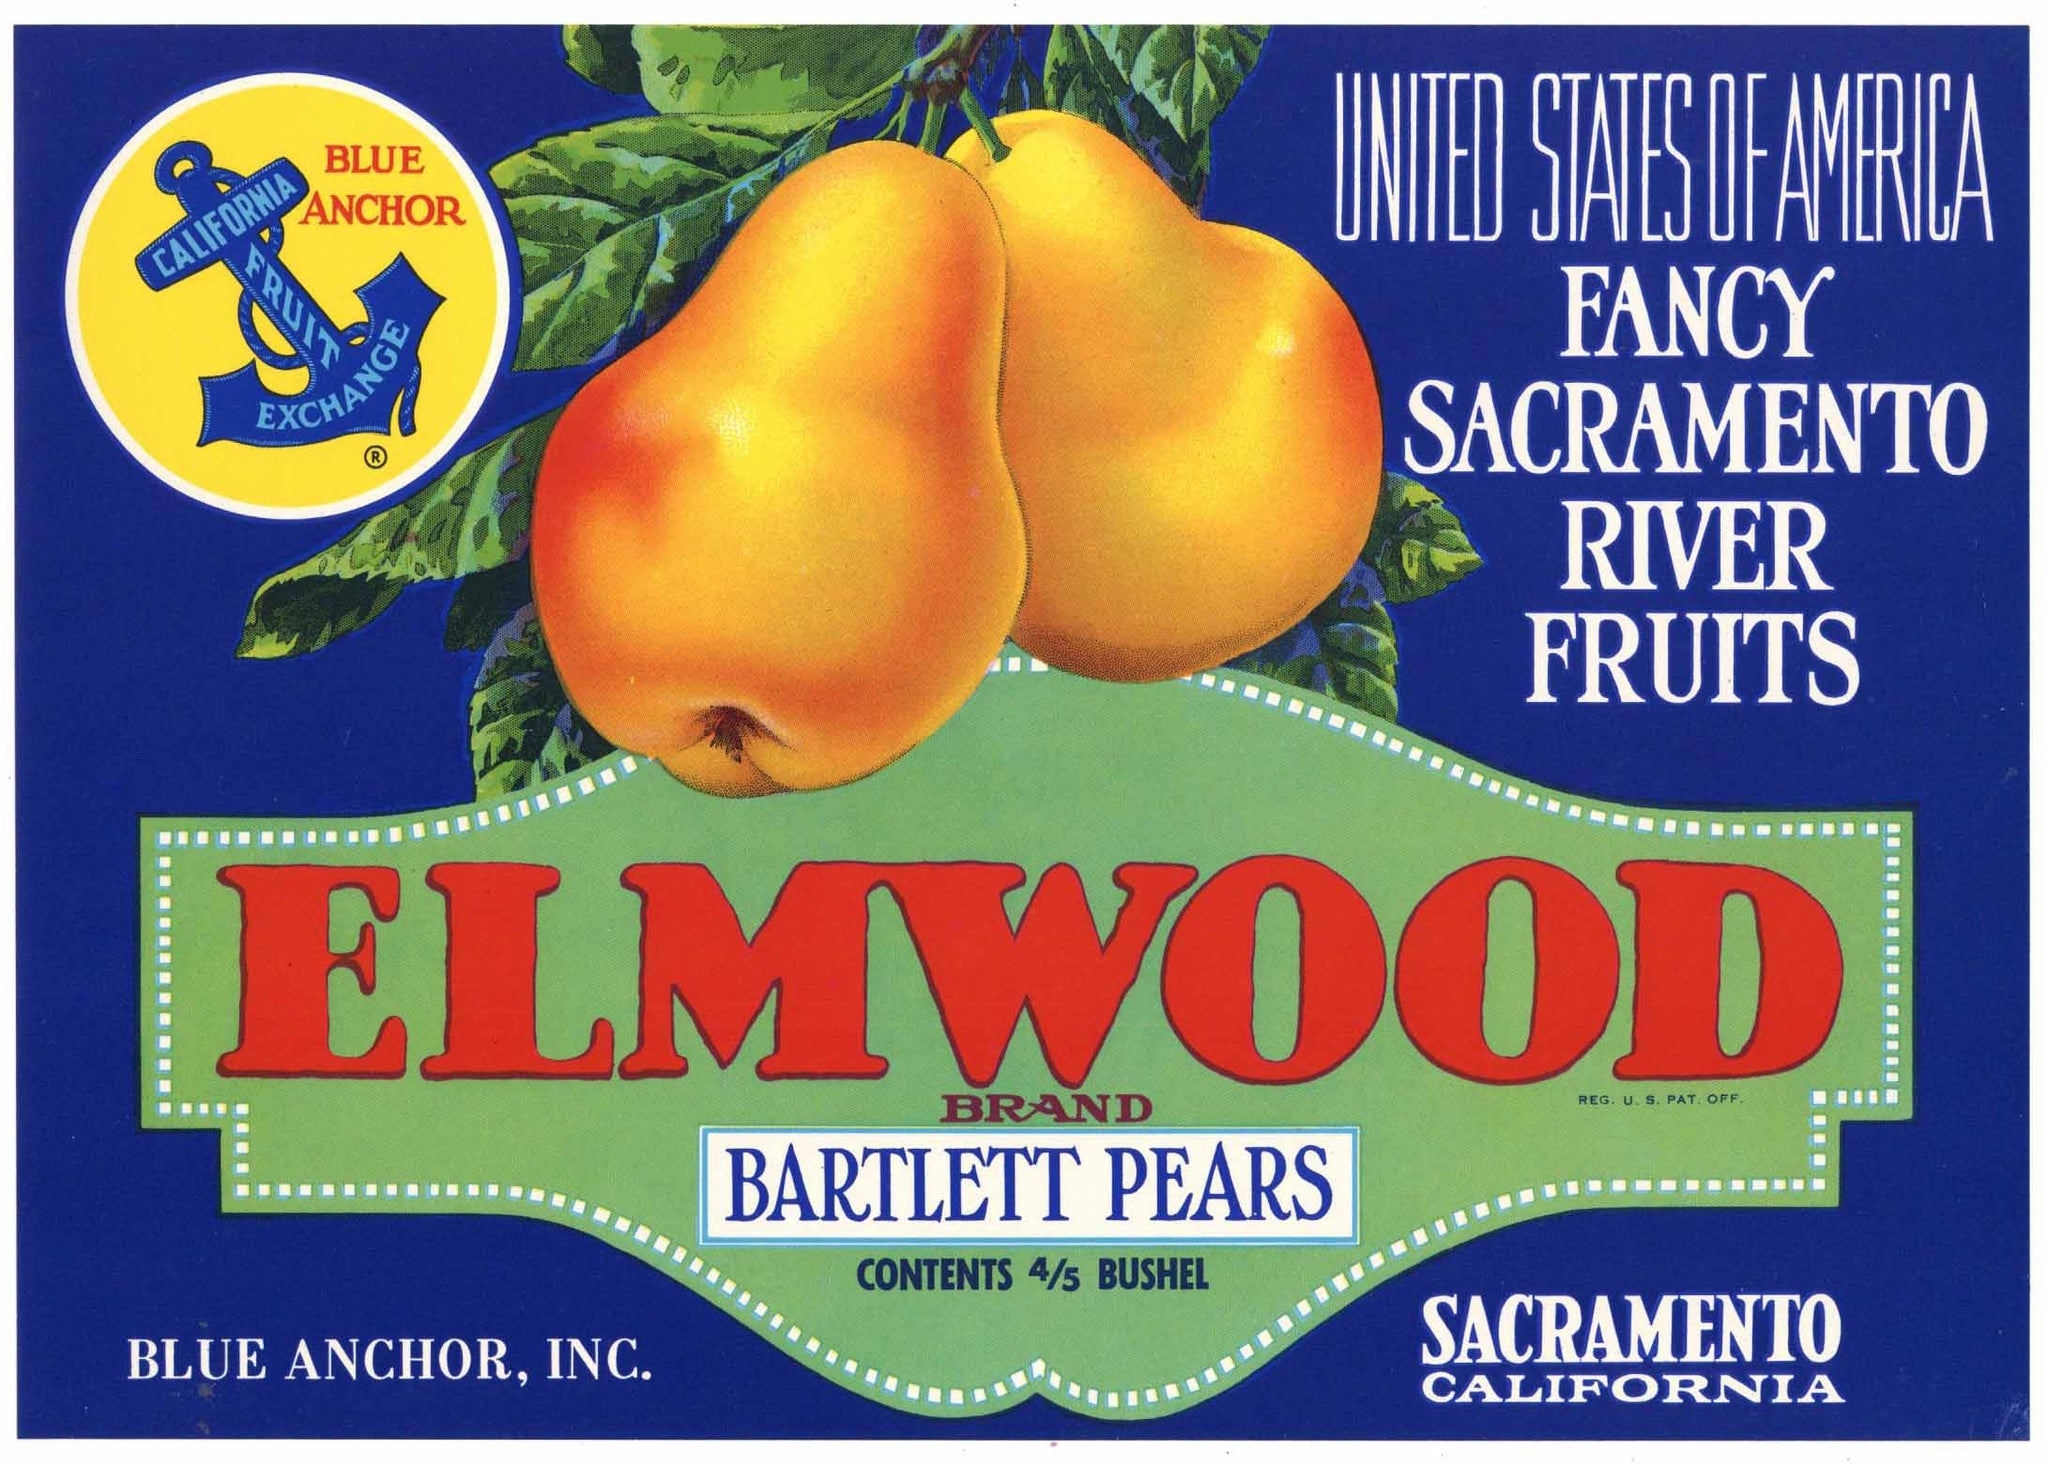 Elmwood Brand Vintage Blue Anchor Inc. Pear Crate Label